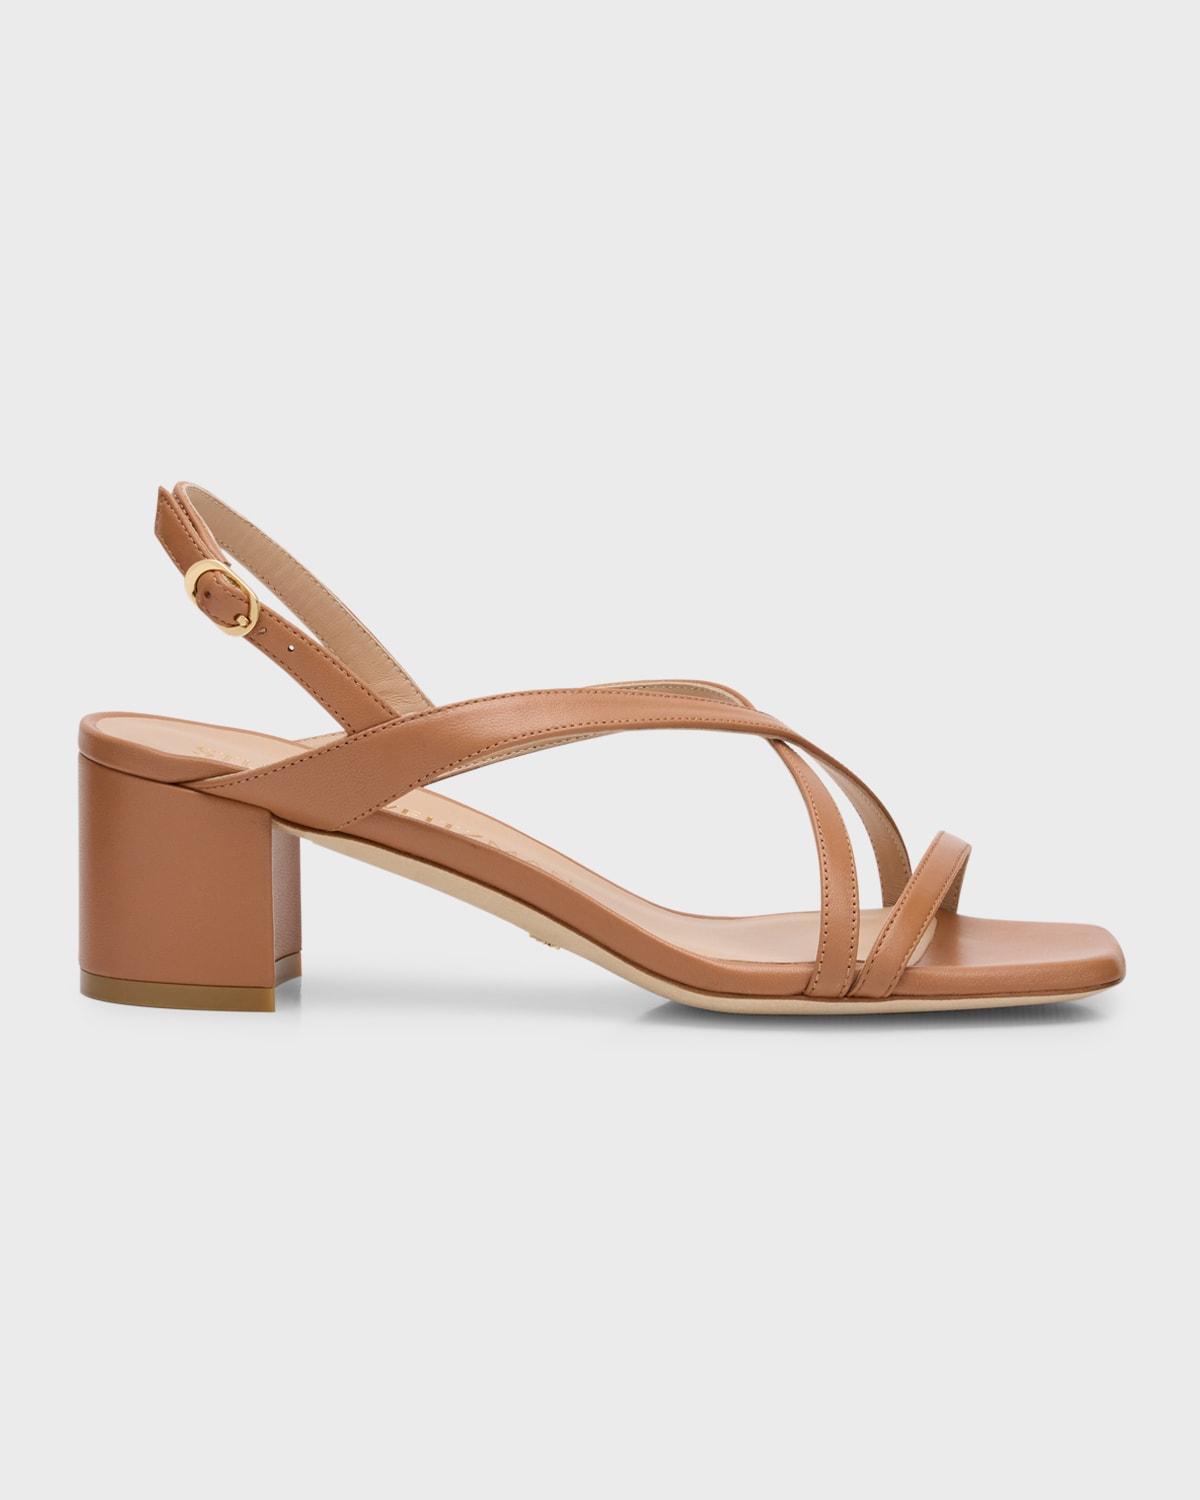 Oasis Maui Leather Slingback Sandals Product Image